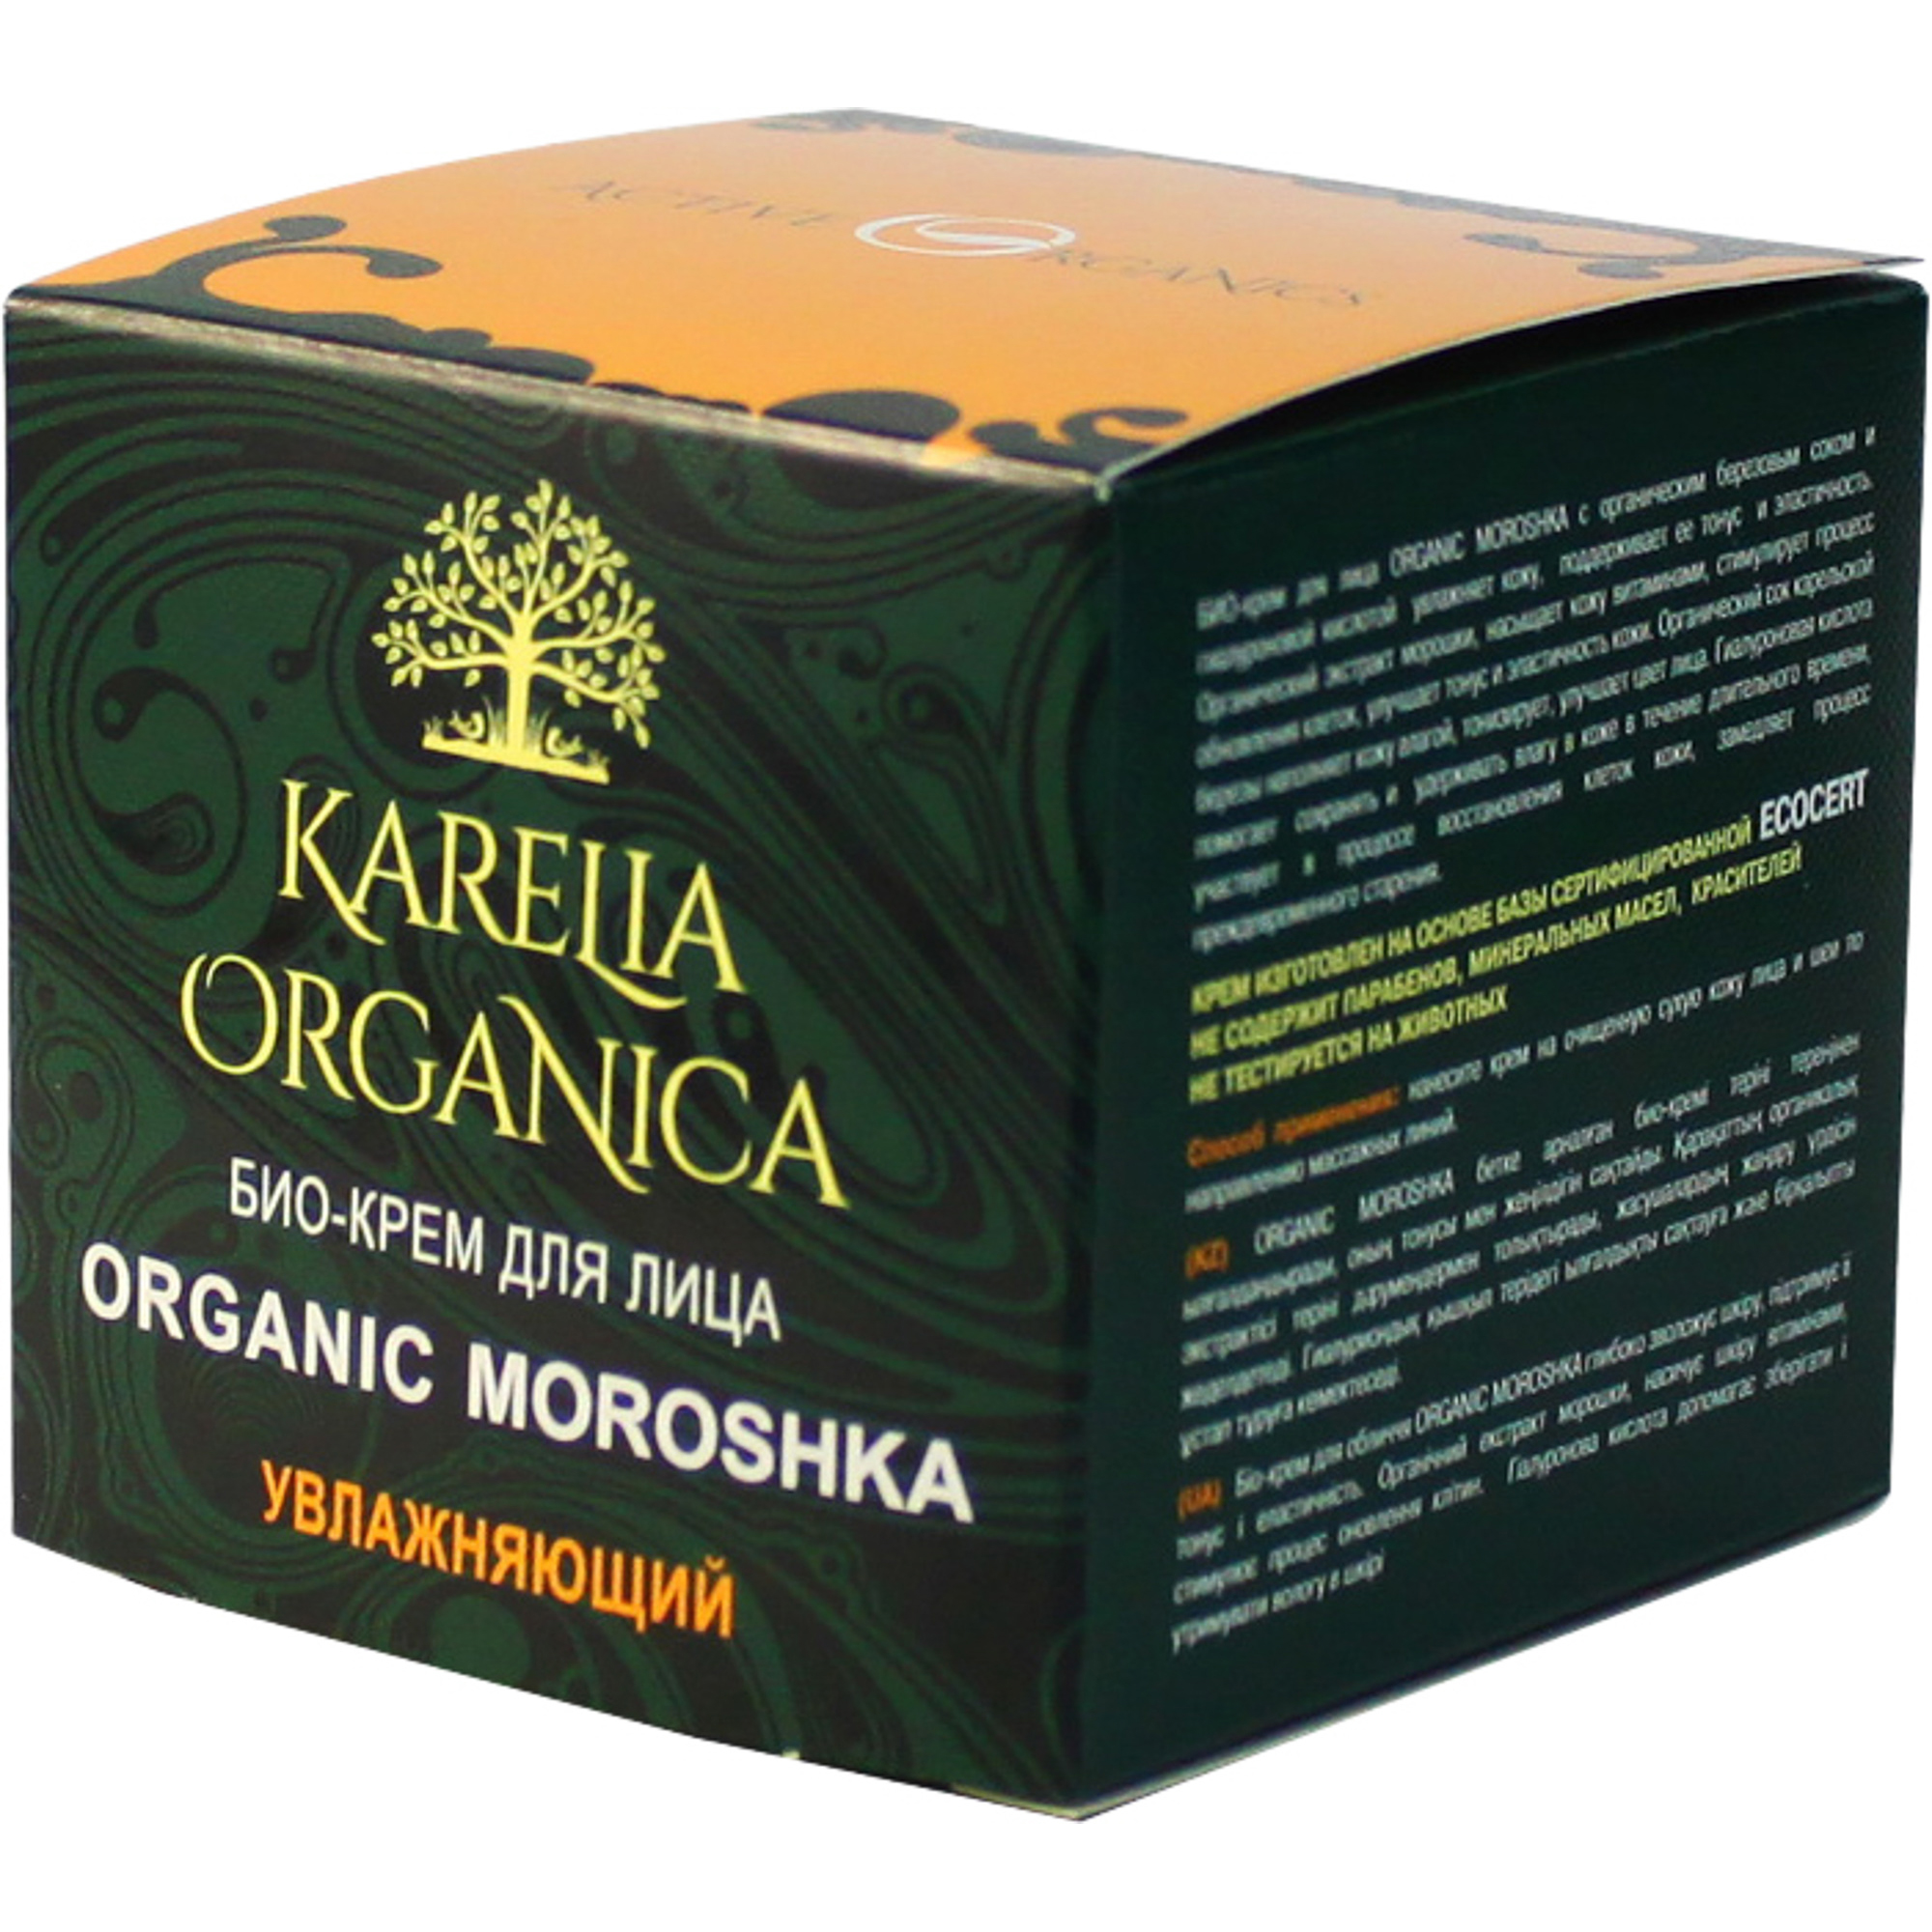 Крем для лица Фратти НВ Karelia Organica Organic Moroshka увлажняющий 50 мл, размер 6x6x6 см 420106 - фото 1